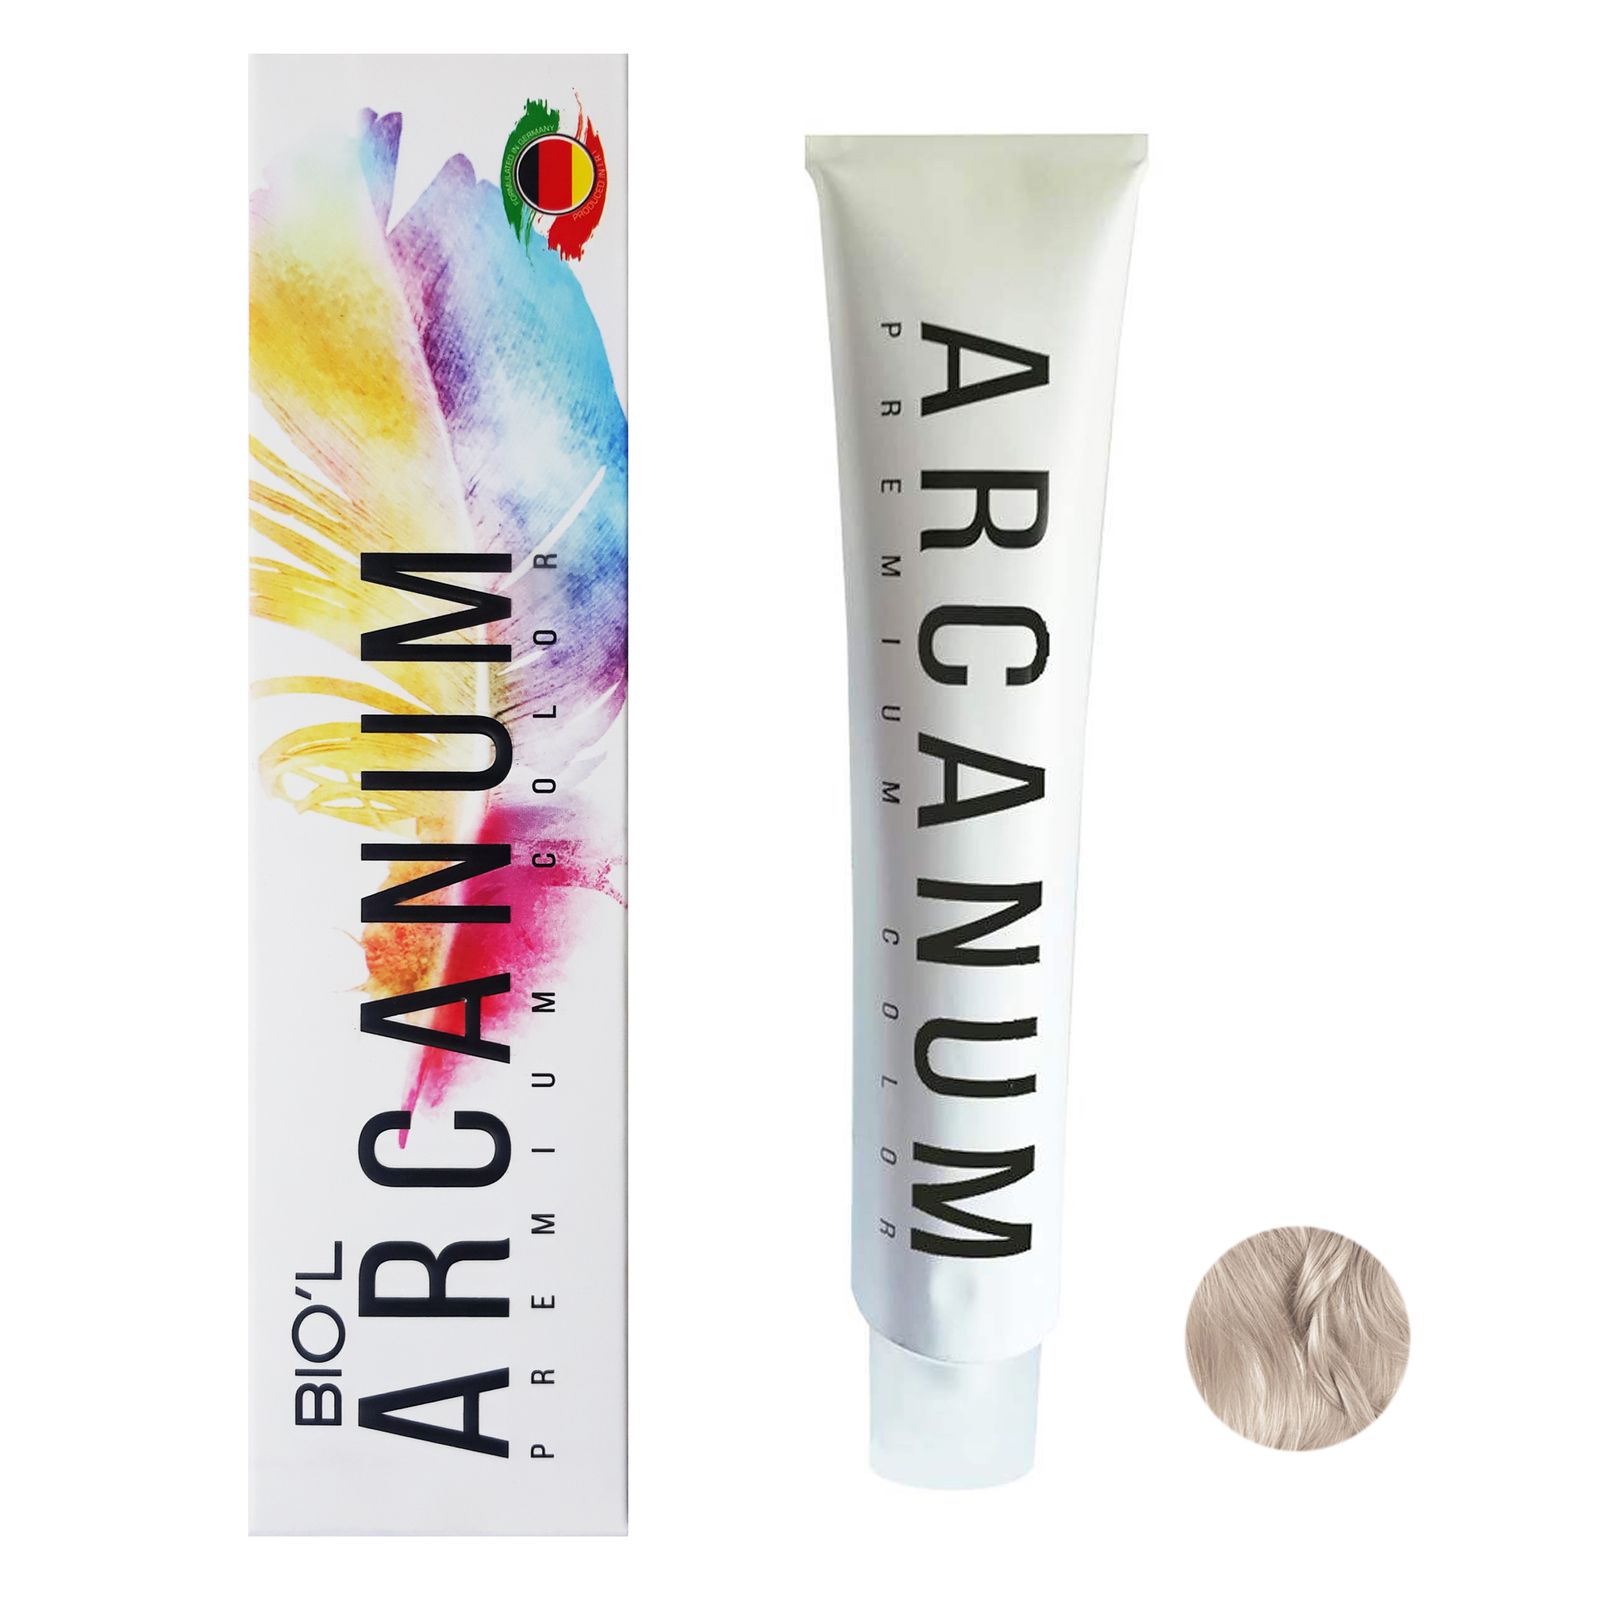 رنگ مو بیول مدل Arcanum شماره 11.1 حجم 120 میلی لیتر رنگ بلوند پلاتینه طبیعی روشن